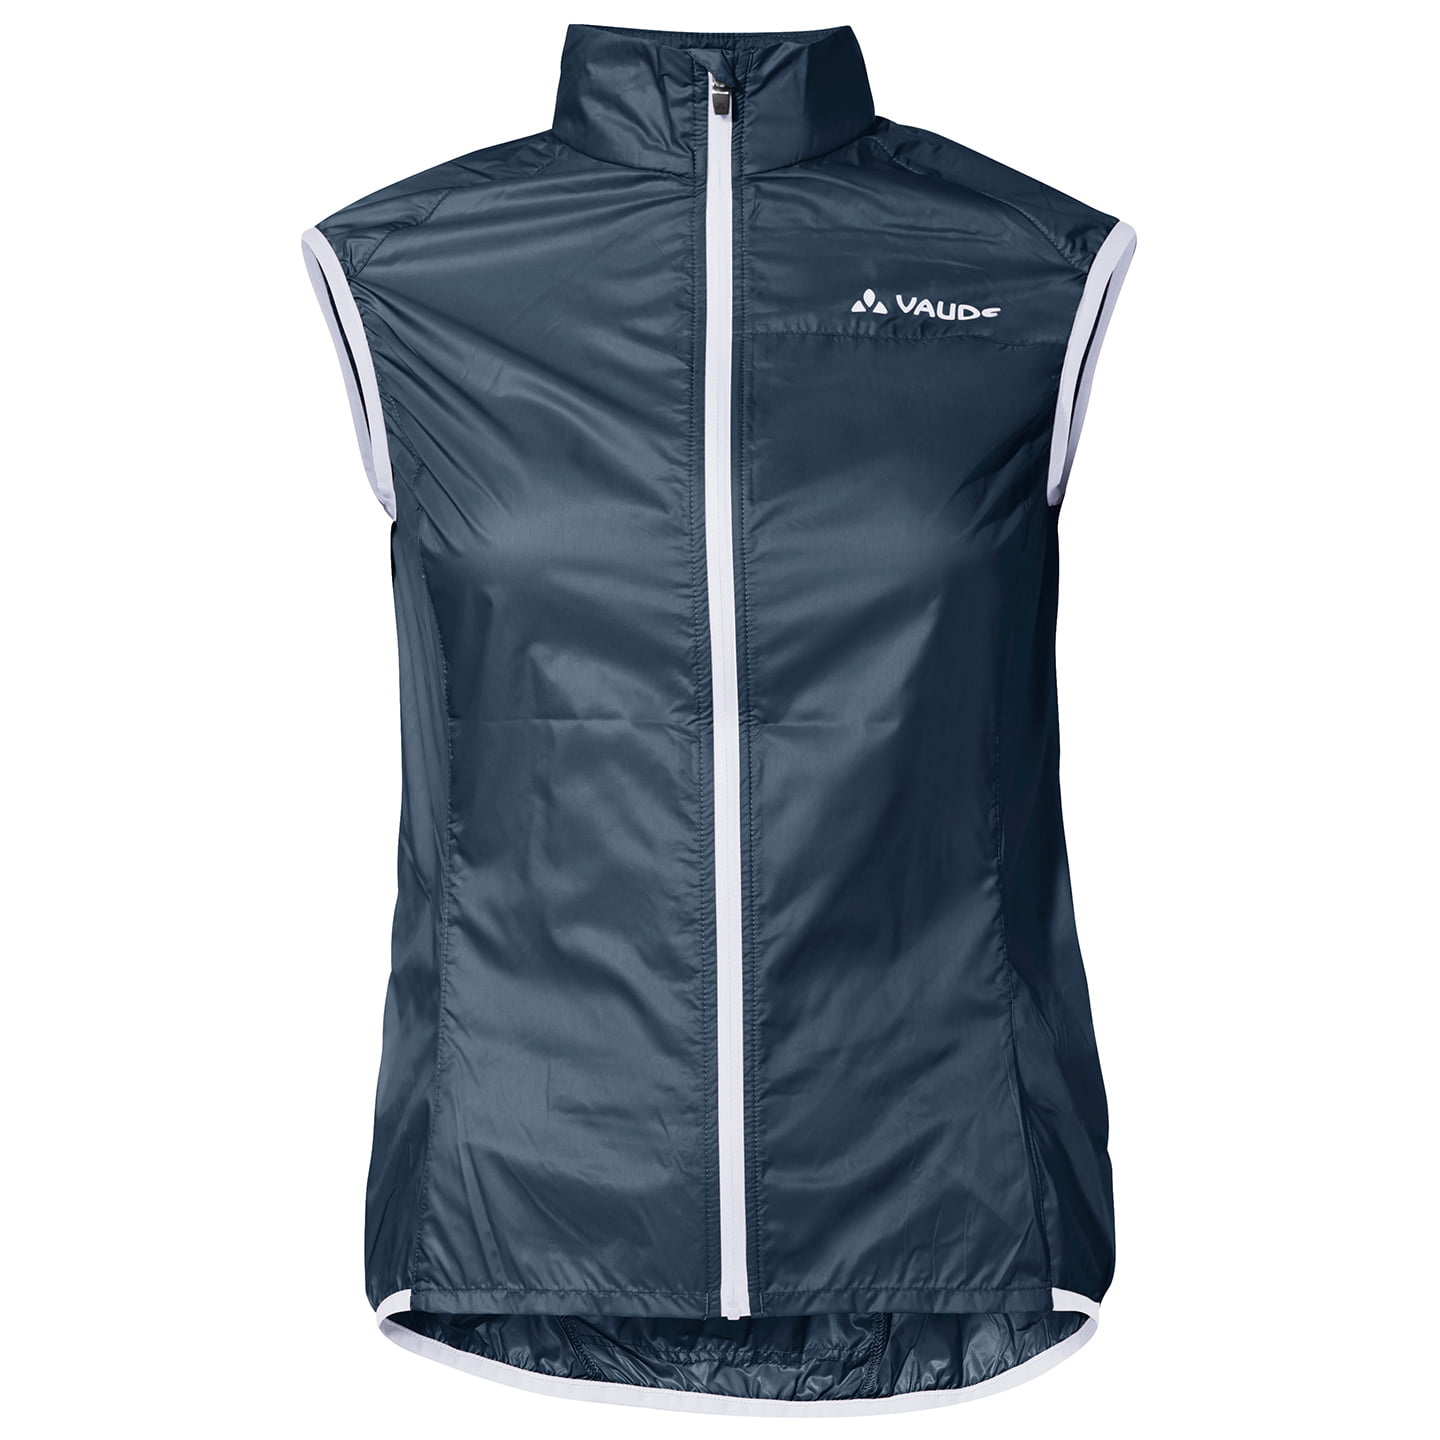 VAUDE Air III Women’s Wind Vest Women’s Wind Vest, size 38, Cycling vest, Cycling clothing